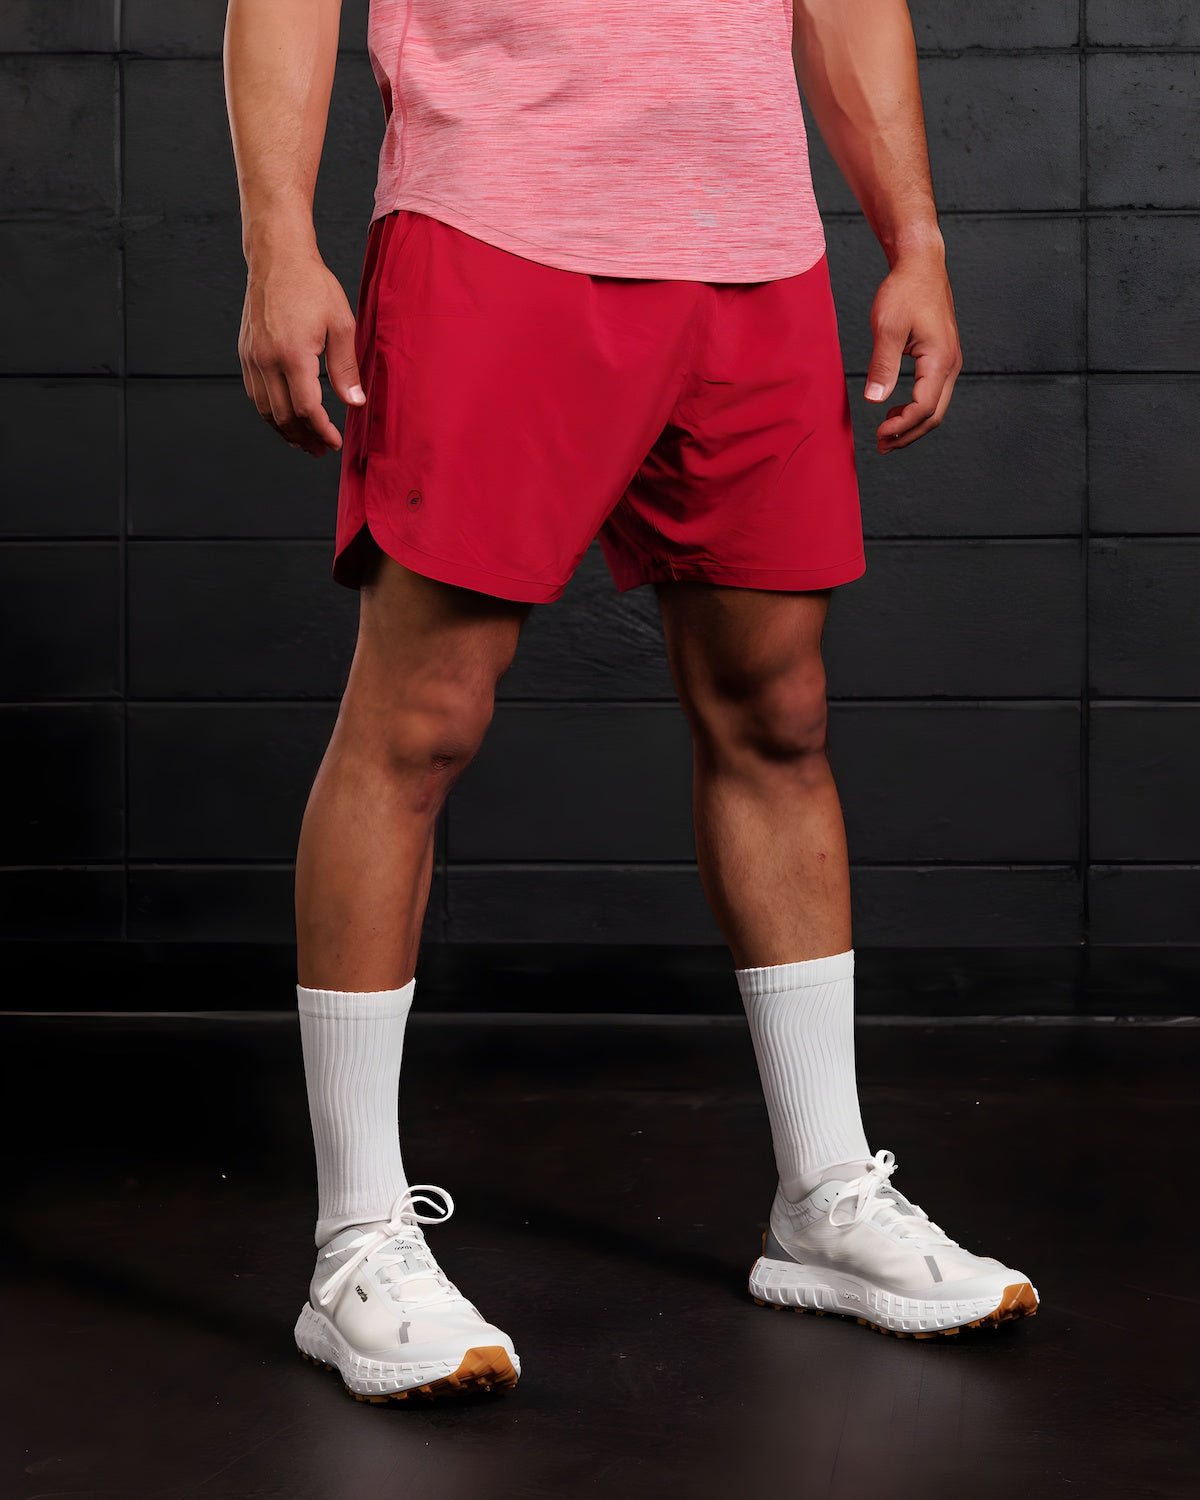 Endeavor Athletic: Workout Clothes for Women & Men